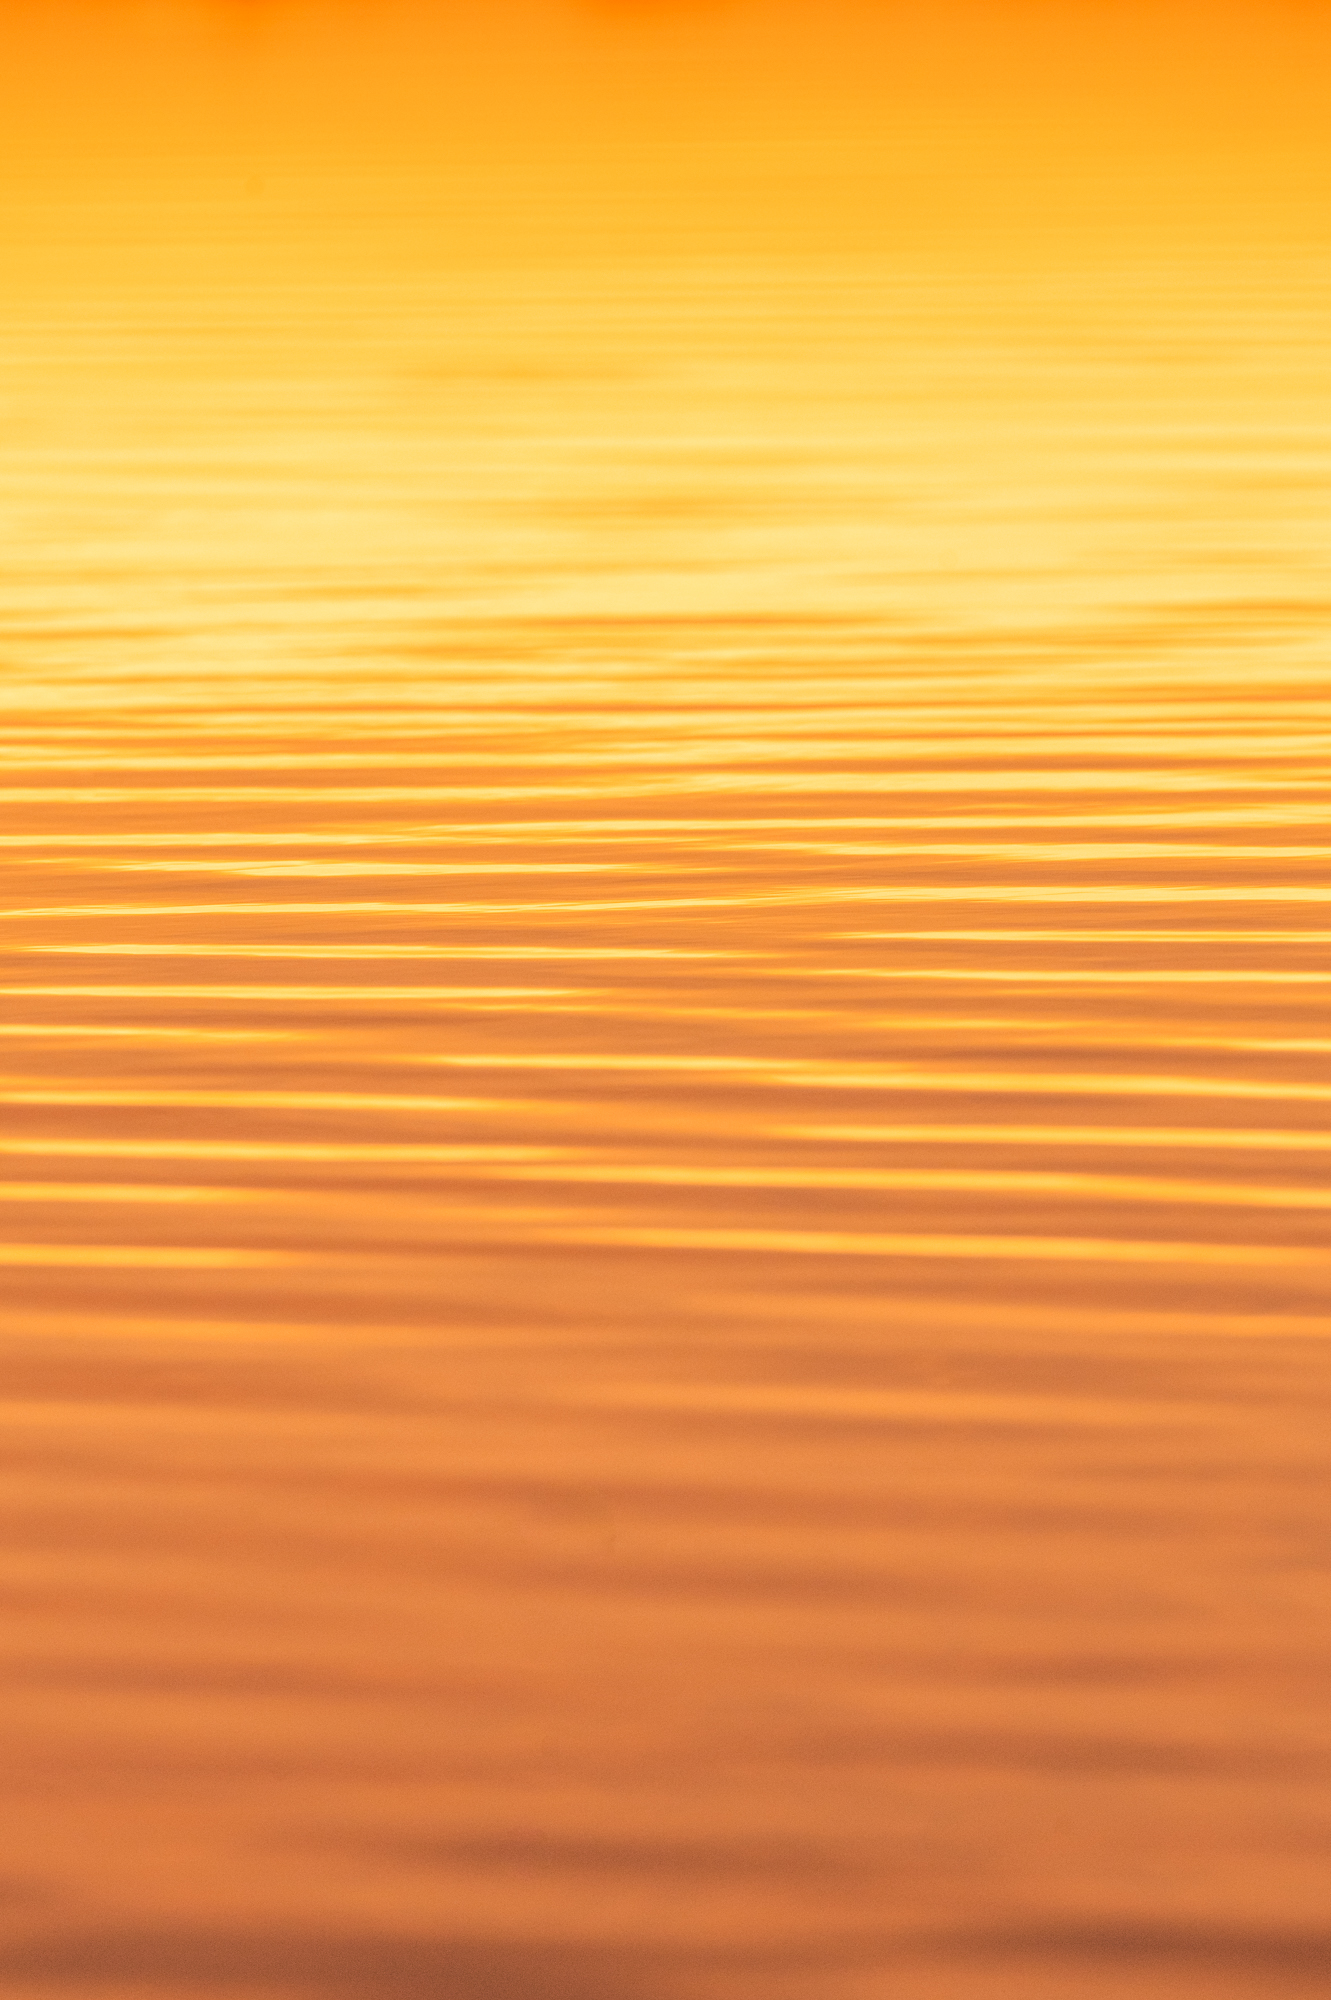 Vibrant, glowing orange ripples in the marsh